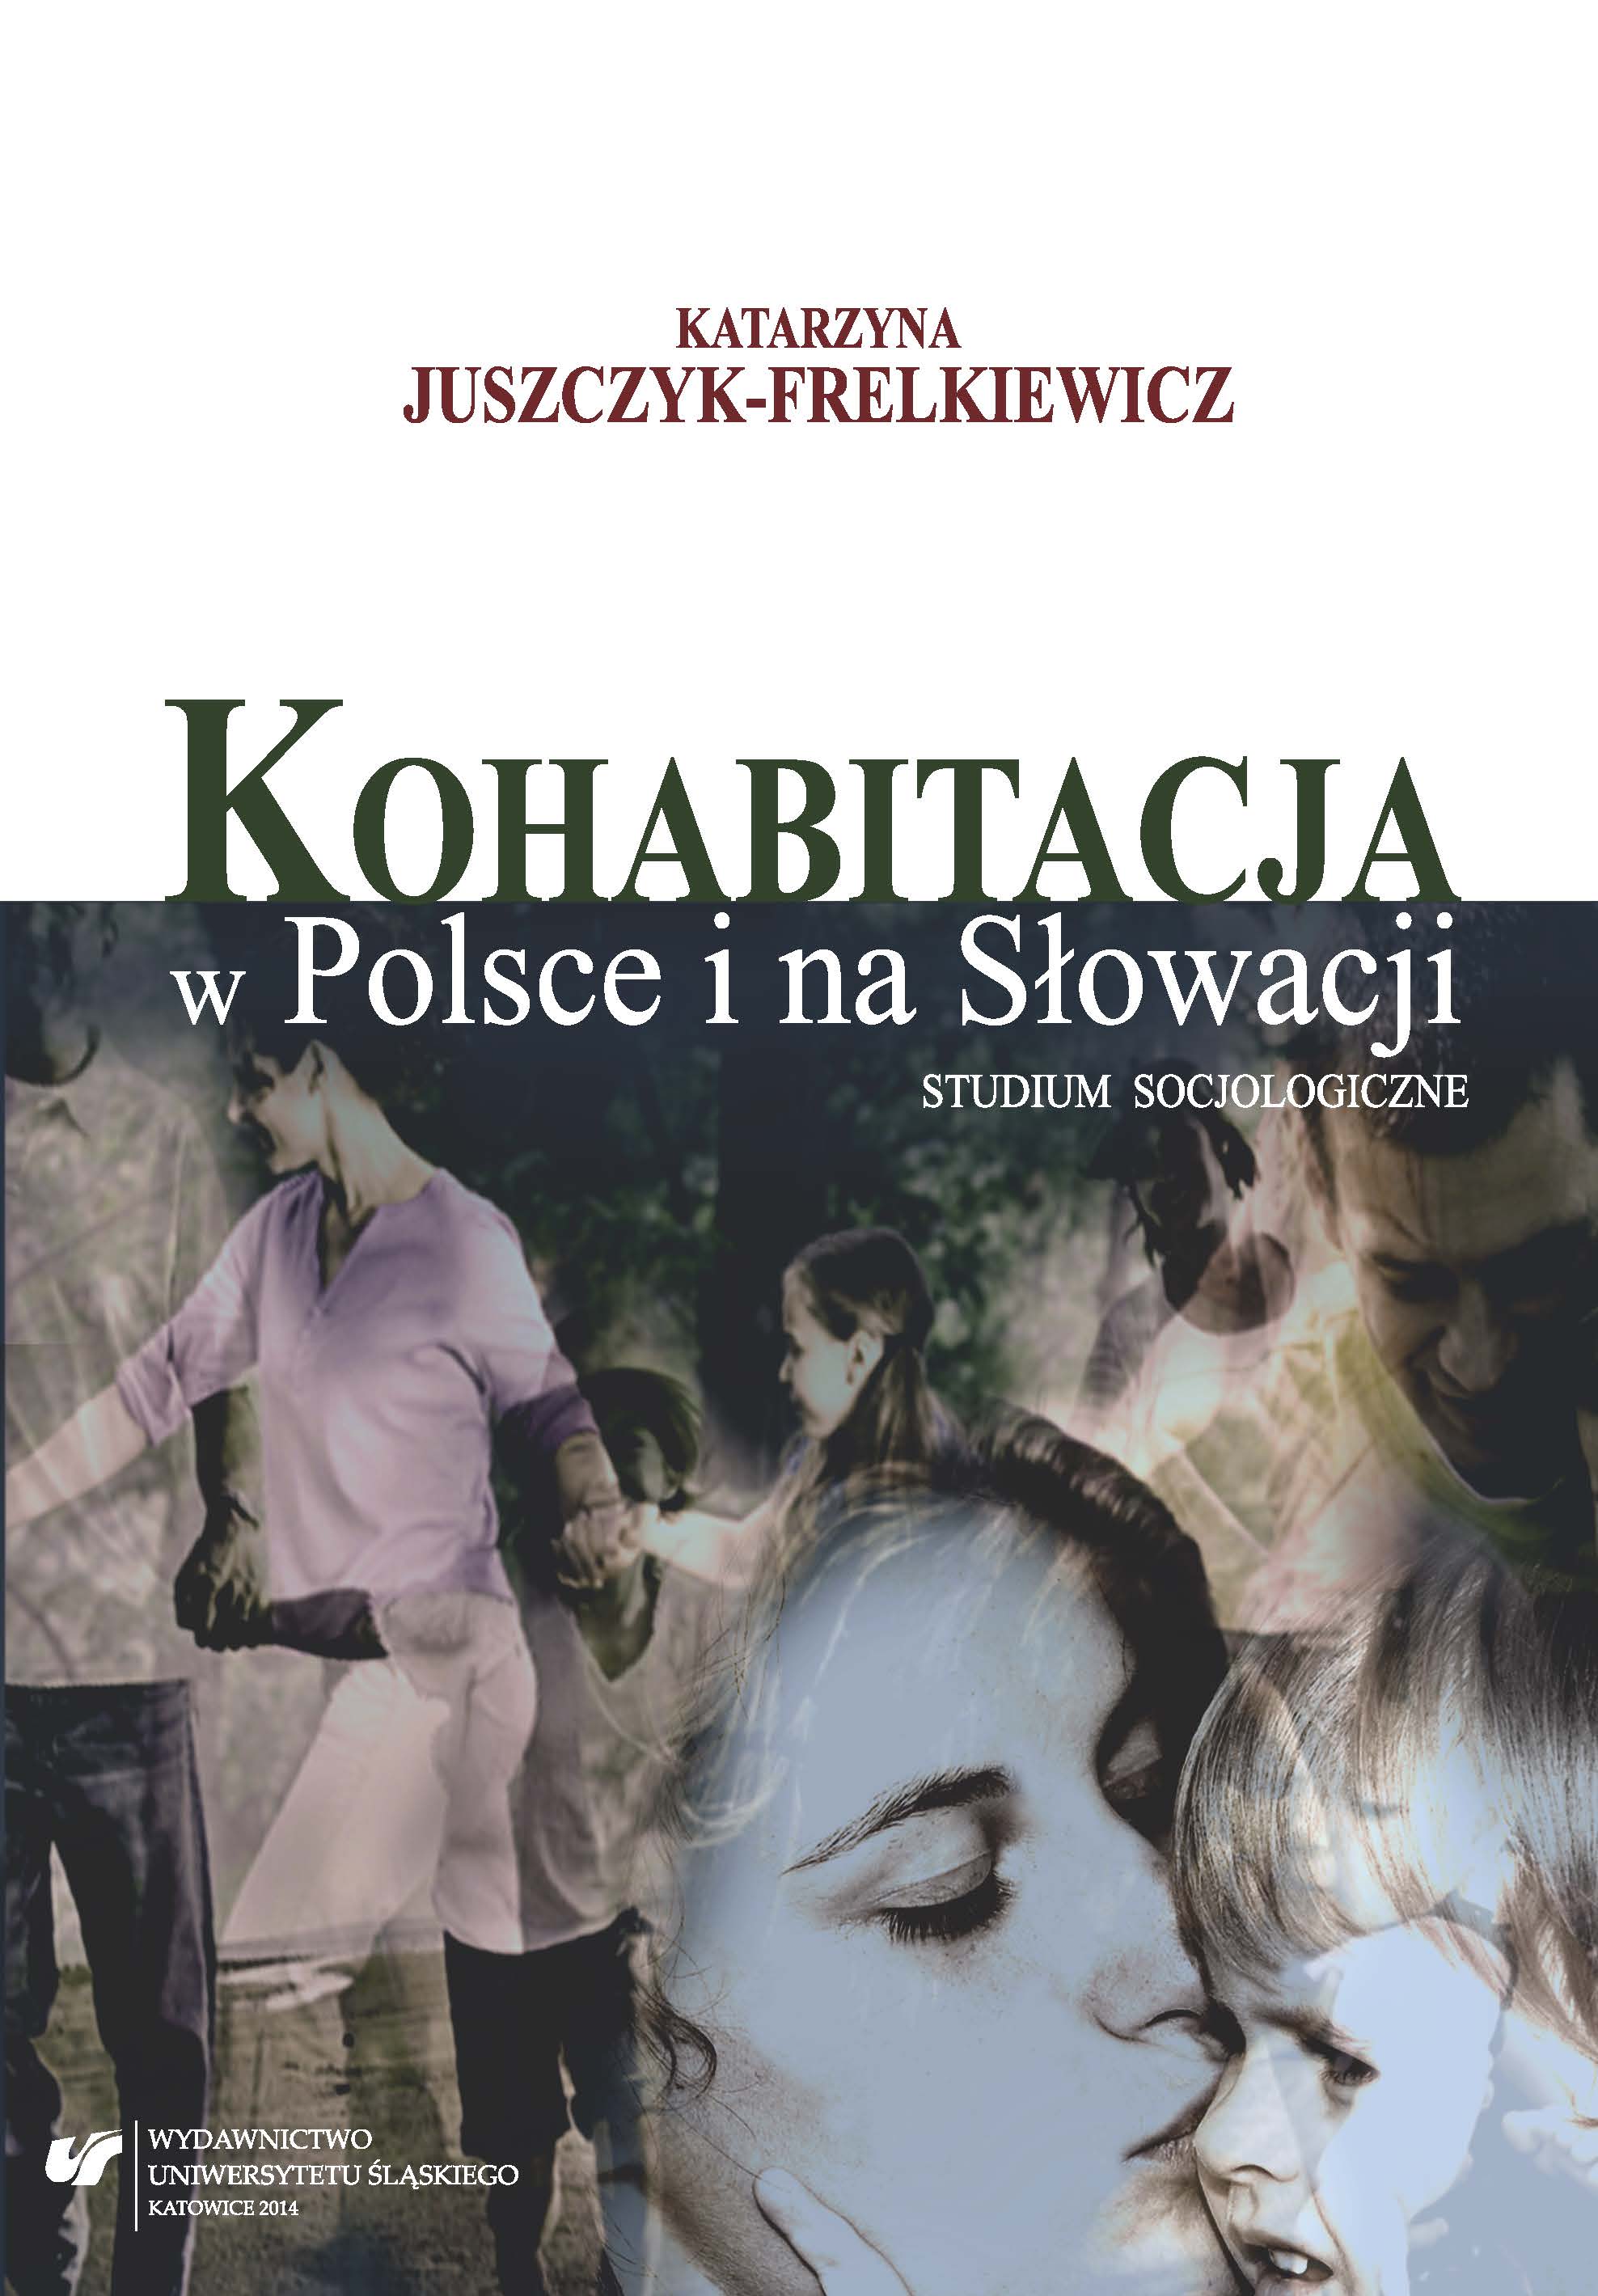 Cohabitation in Poland and Slovak Republic. A Sociological Study